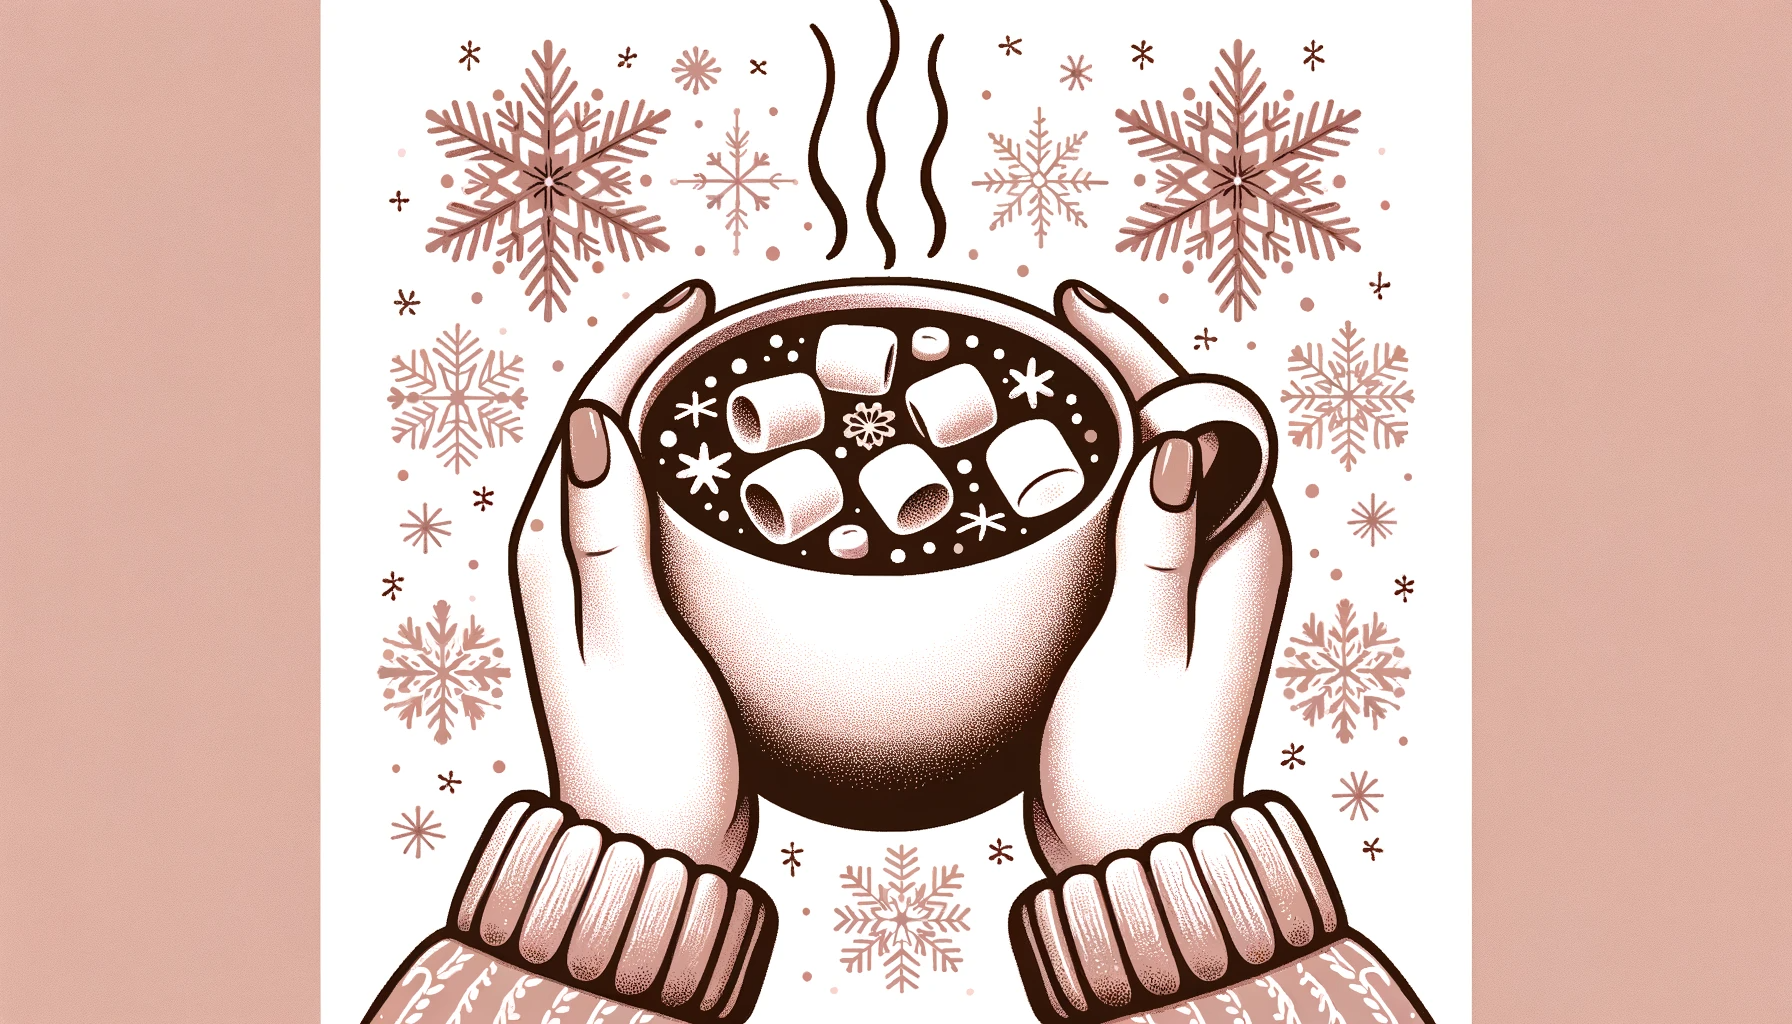 December Delight Warmth in a Mug